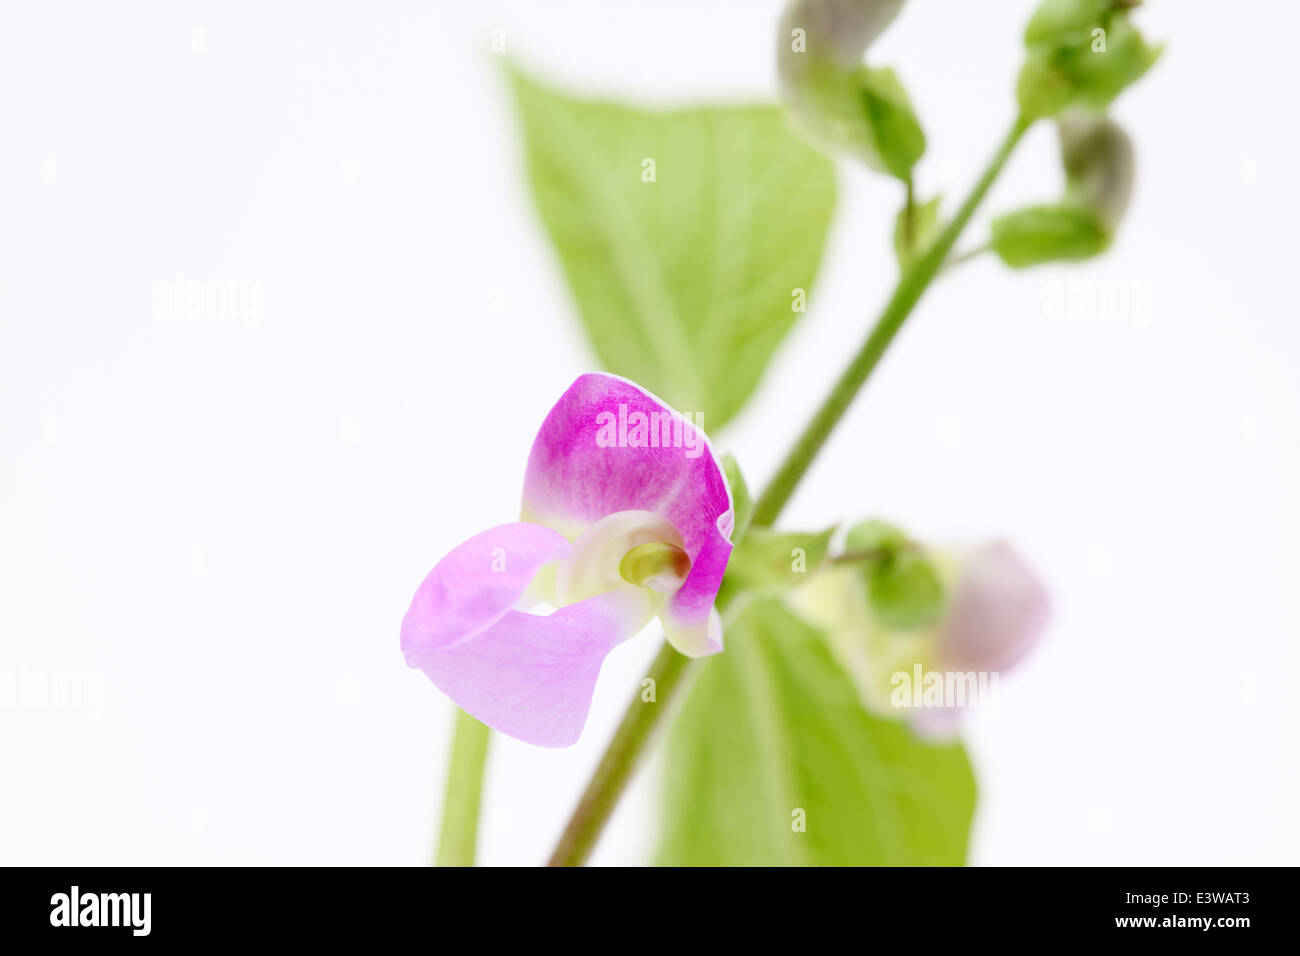 green bean flower on white background Stock Photo